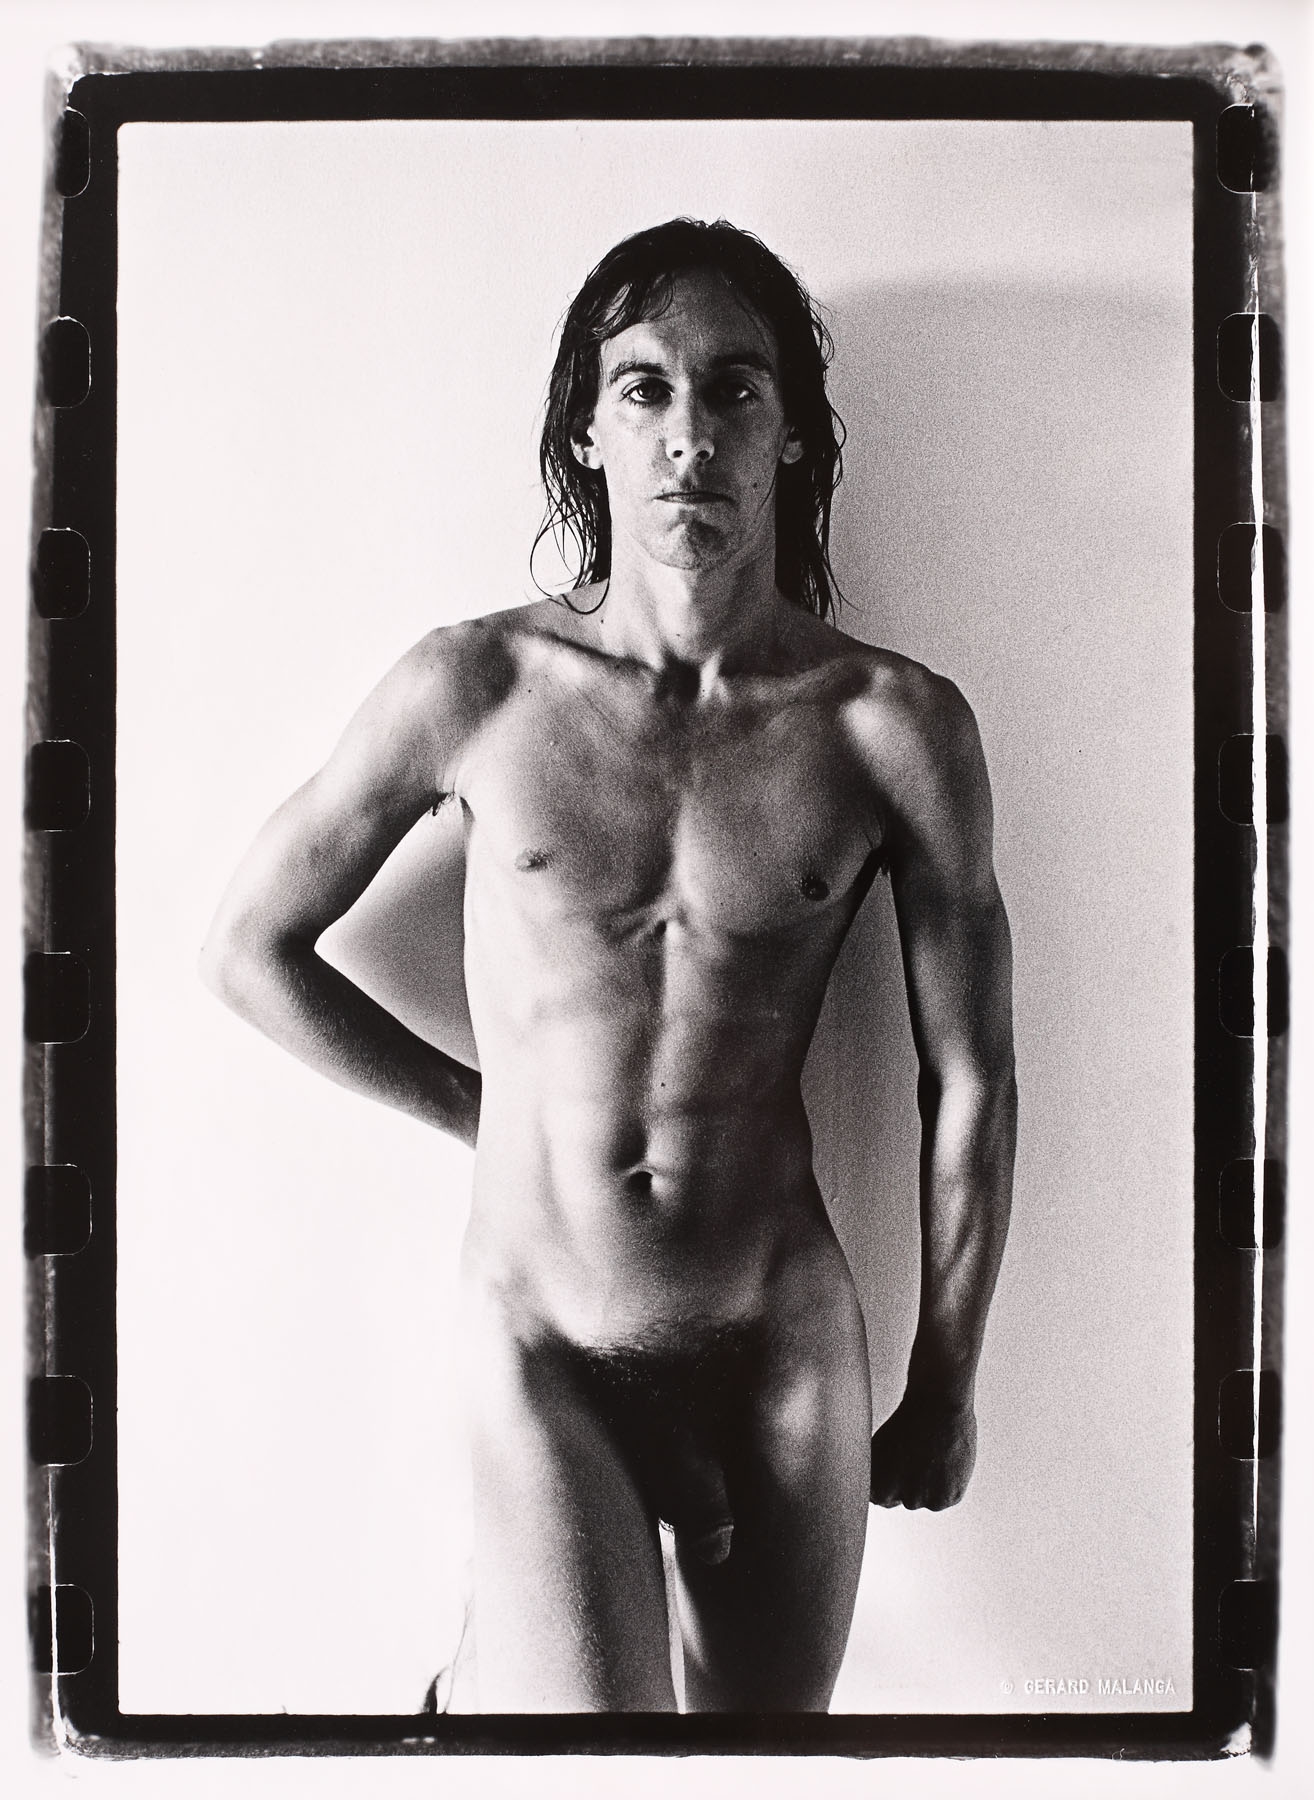 Artwork by Gerard Malanga, Iggy Pop Naked, Made of black and white photogra...